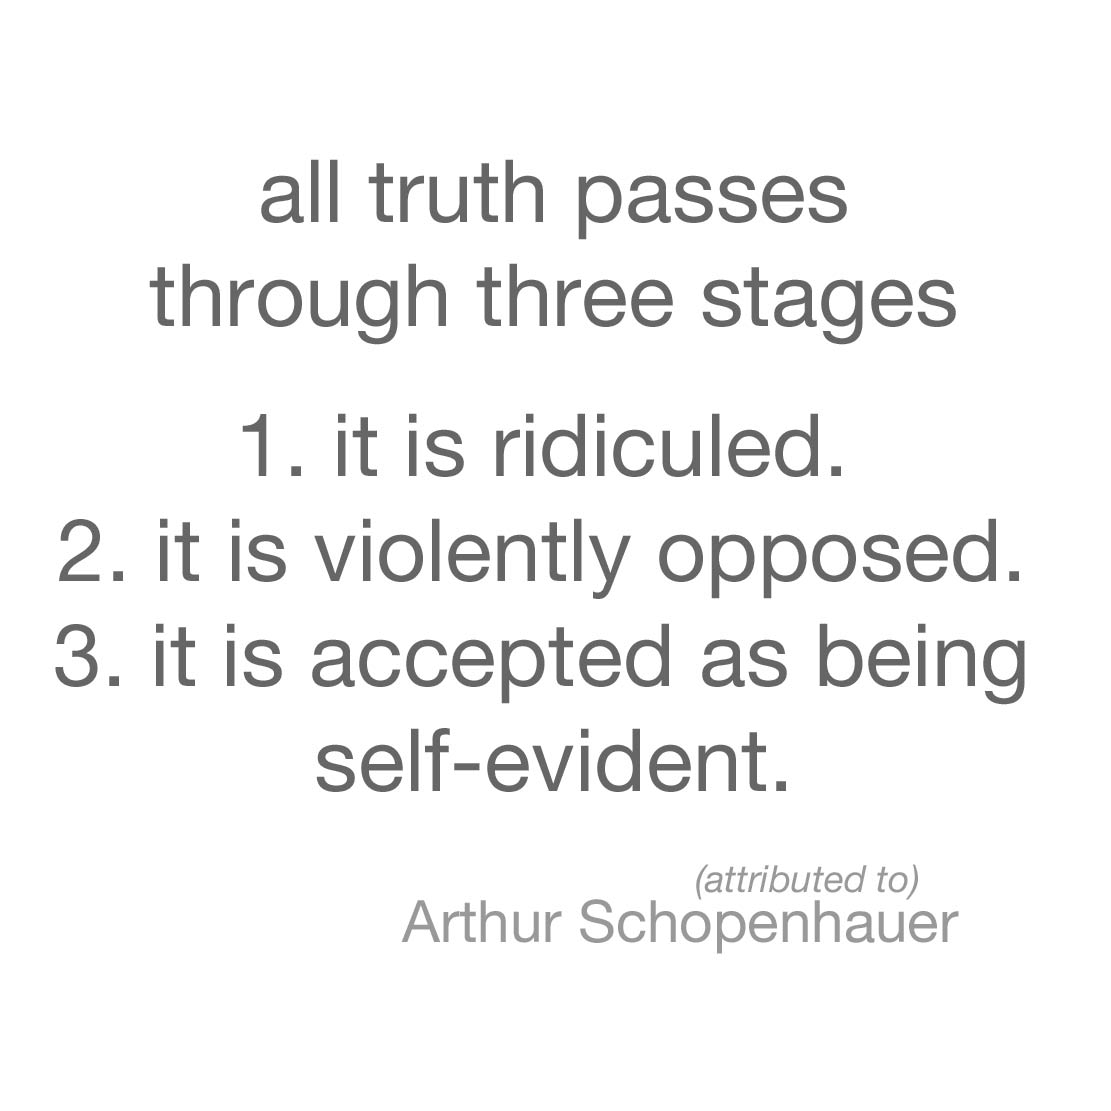 Quote from Arthur Schopenhauer